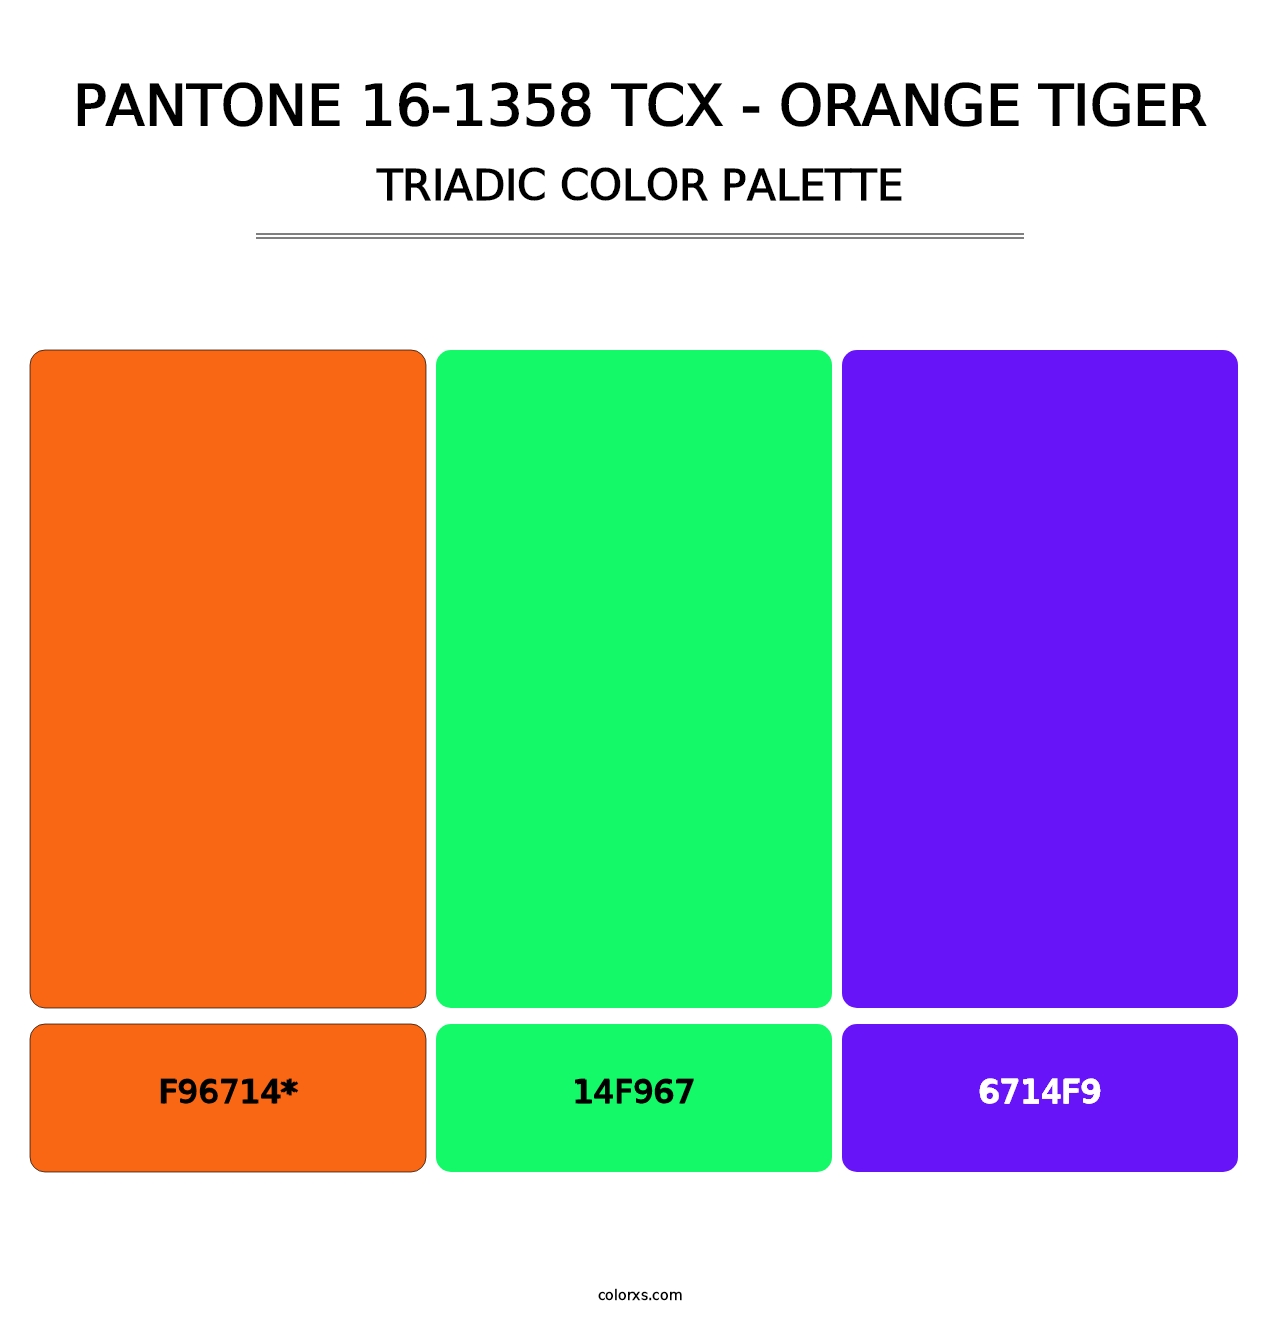 PANTONE 16-1358 TCX - Orange Tiger - Triadic Color Palette